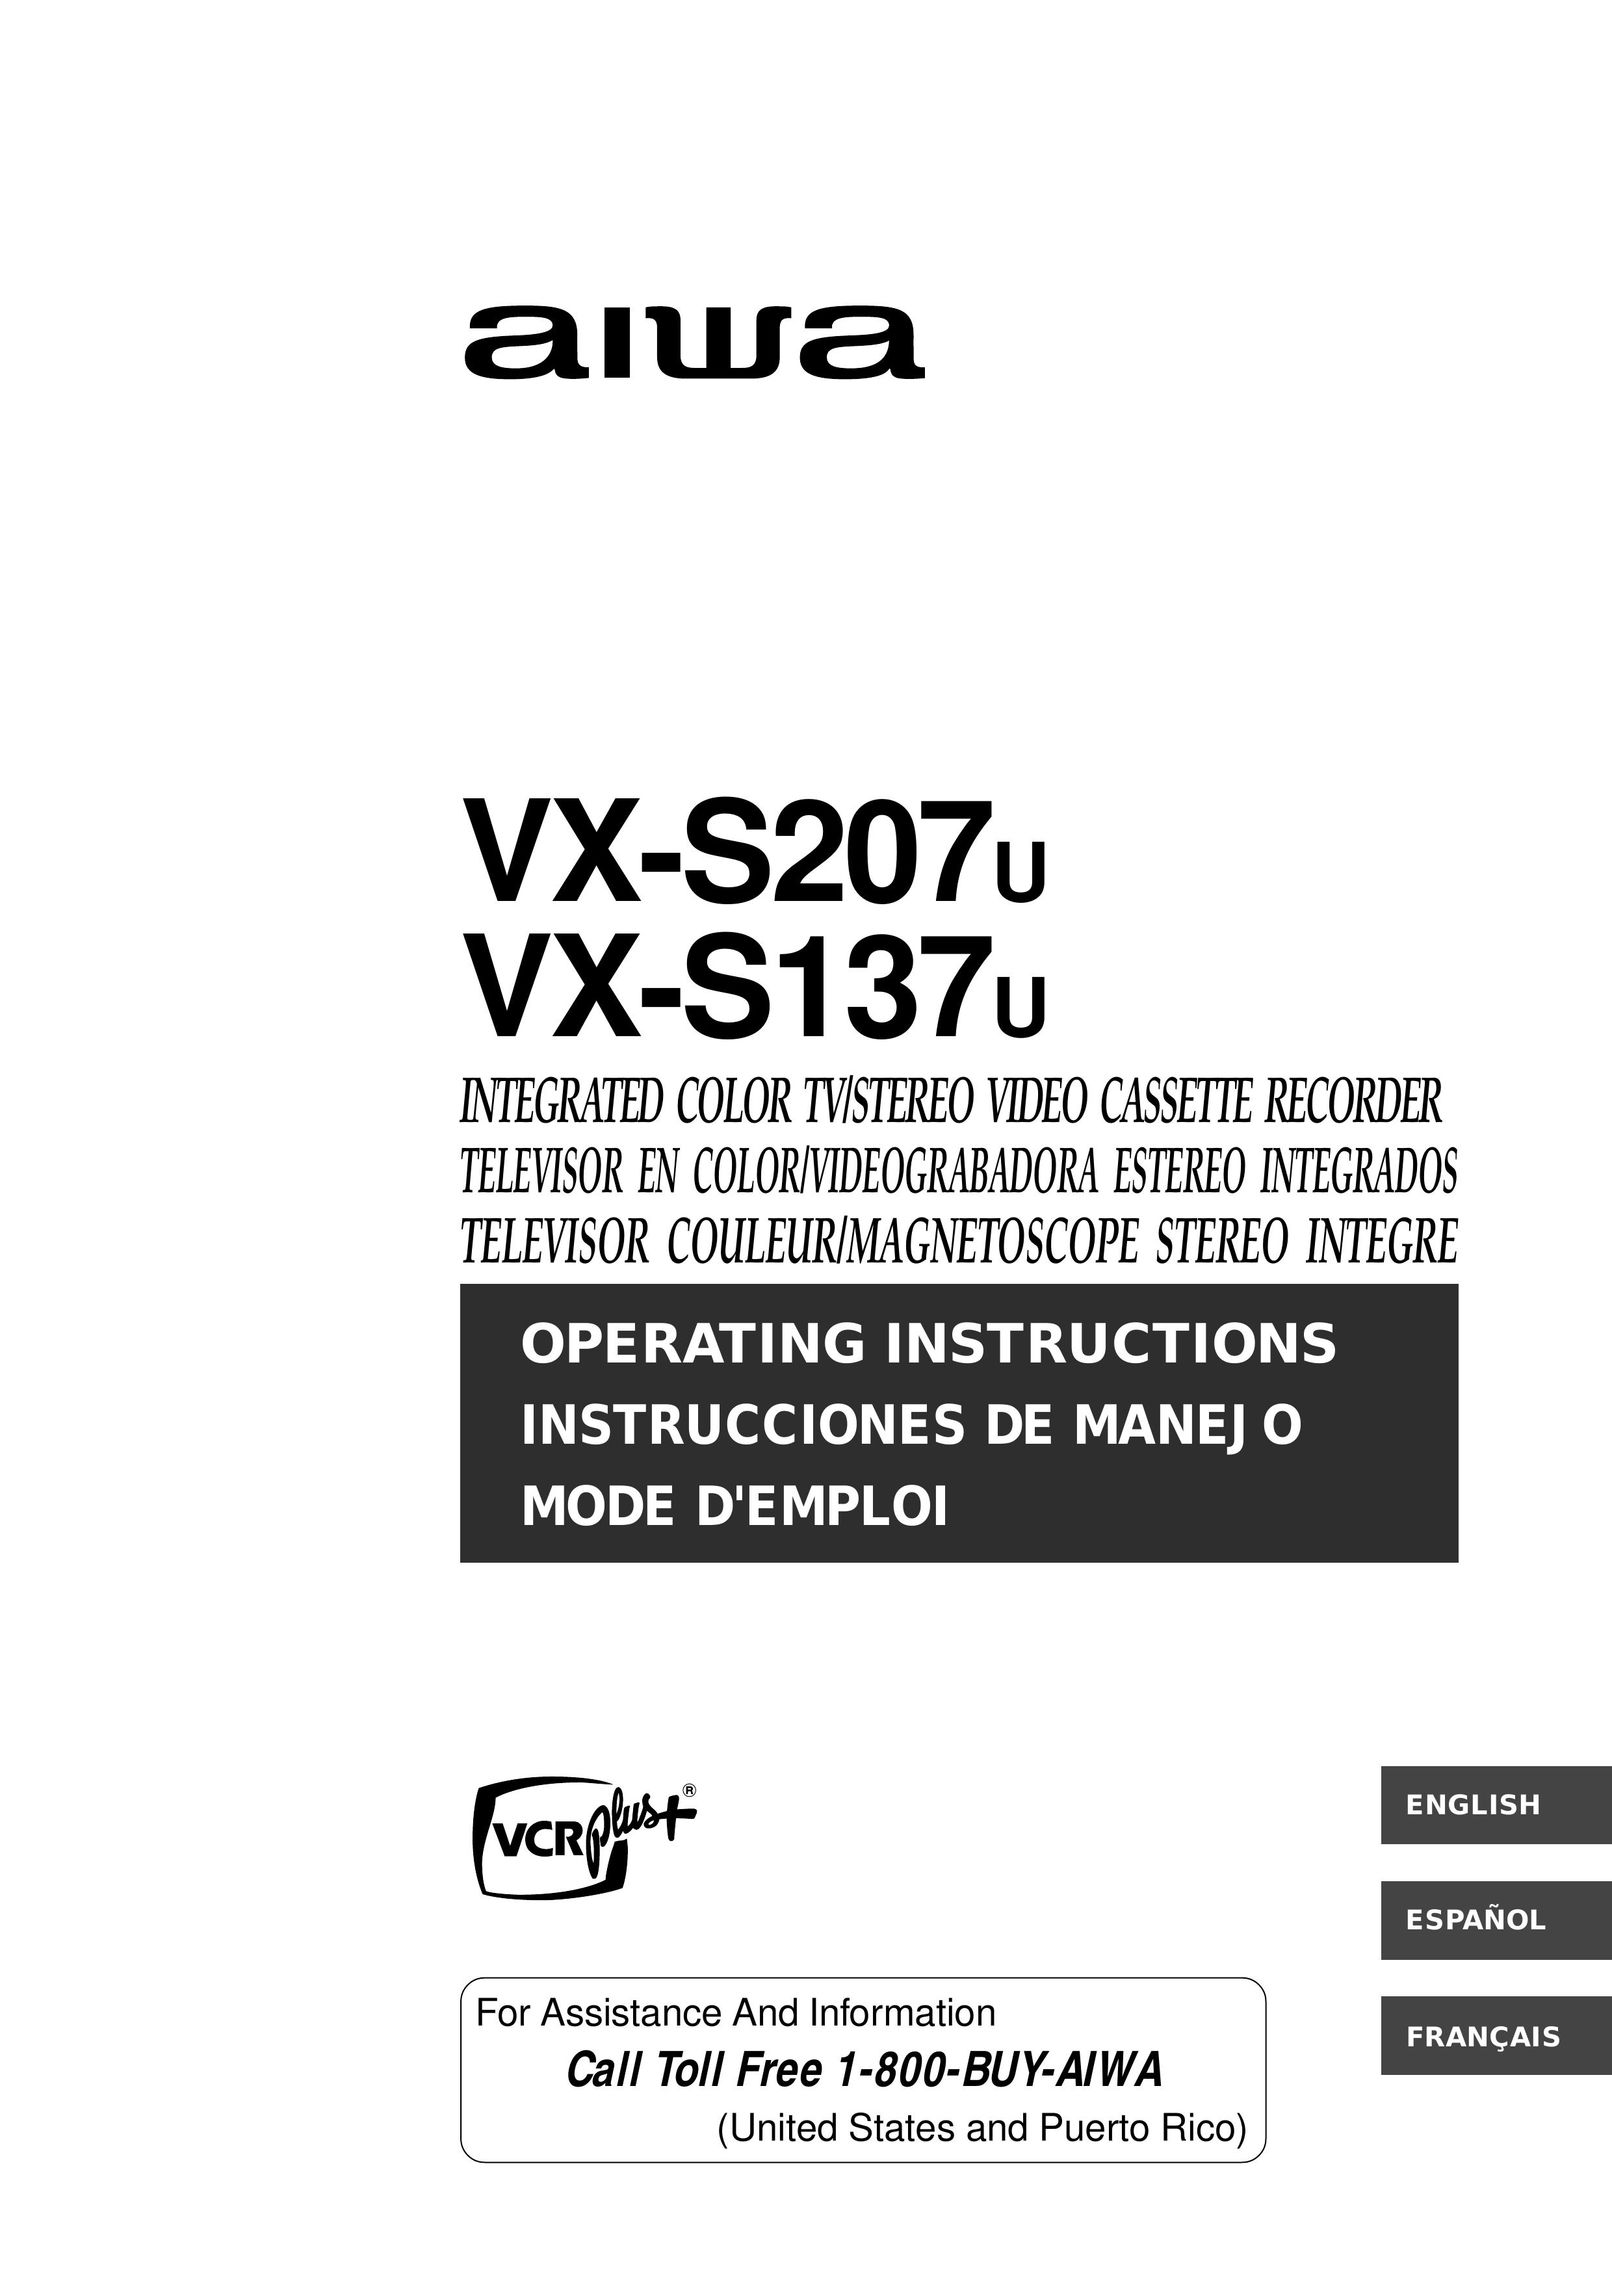 Aiwa VX-S137U VCR User Manual